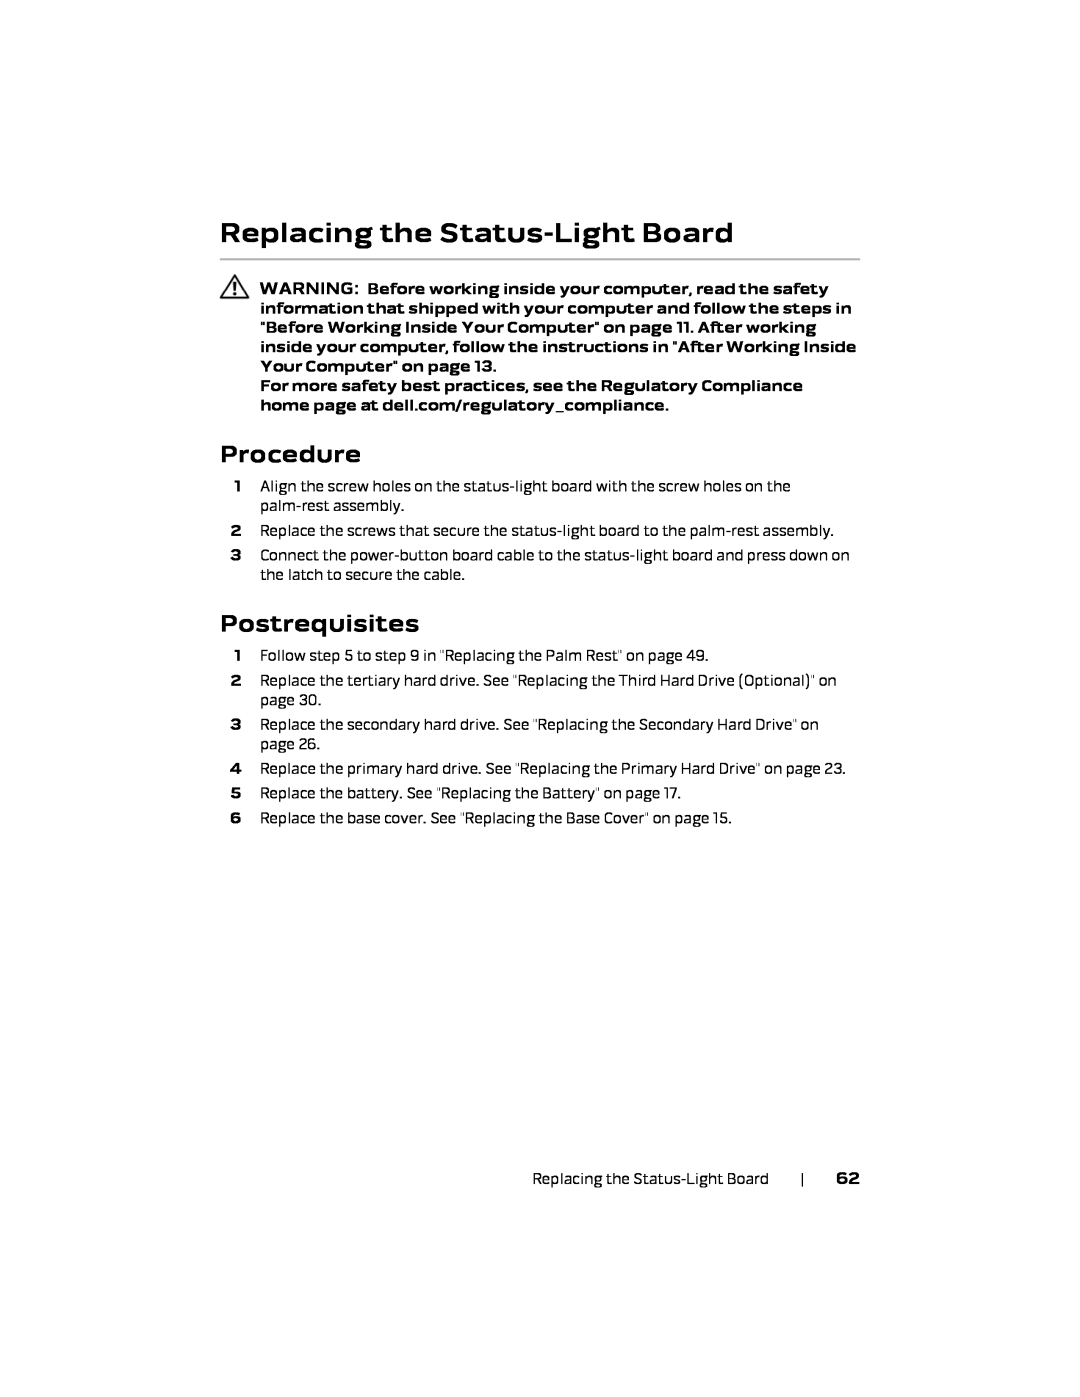 Alienware P18E, 17 R1 owner manual Replacing the Status-Light Board, Procedure, Postrequisites 